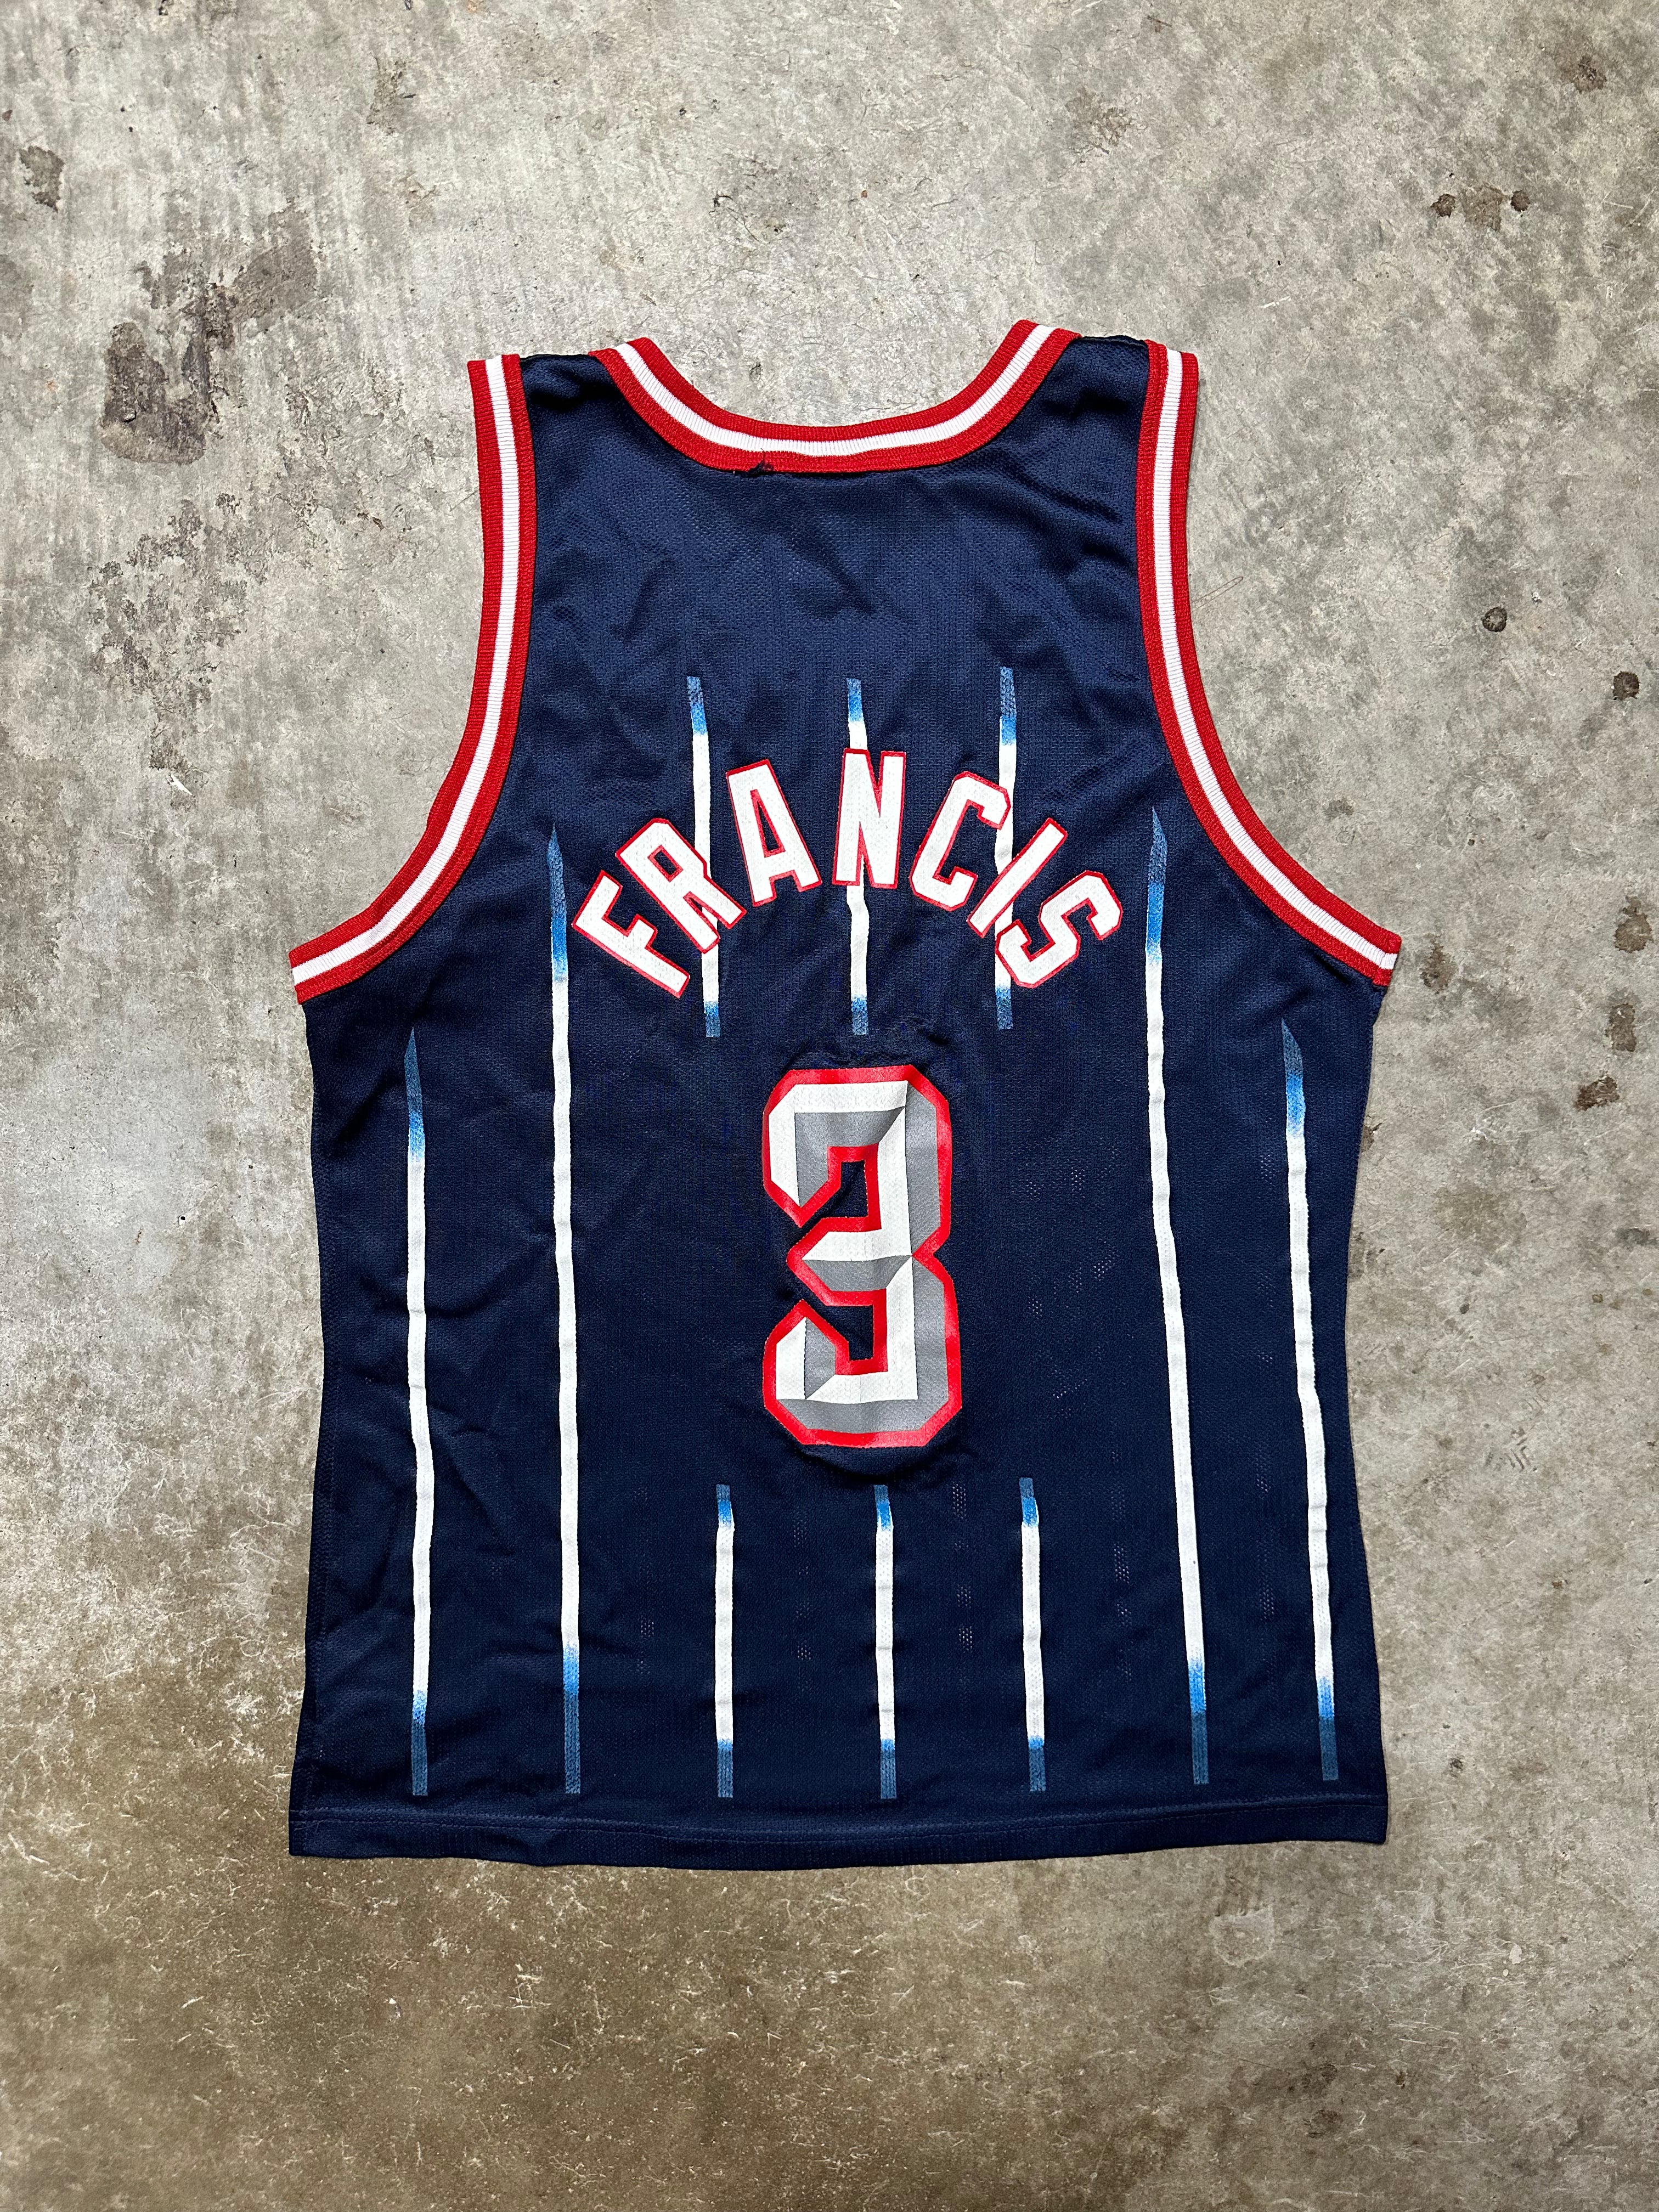 Steve Francis Rockets jersey